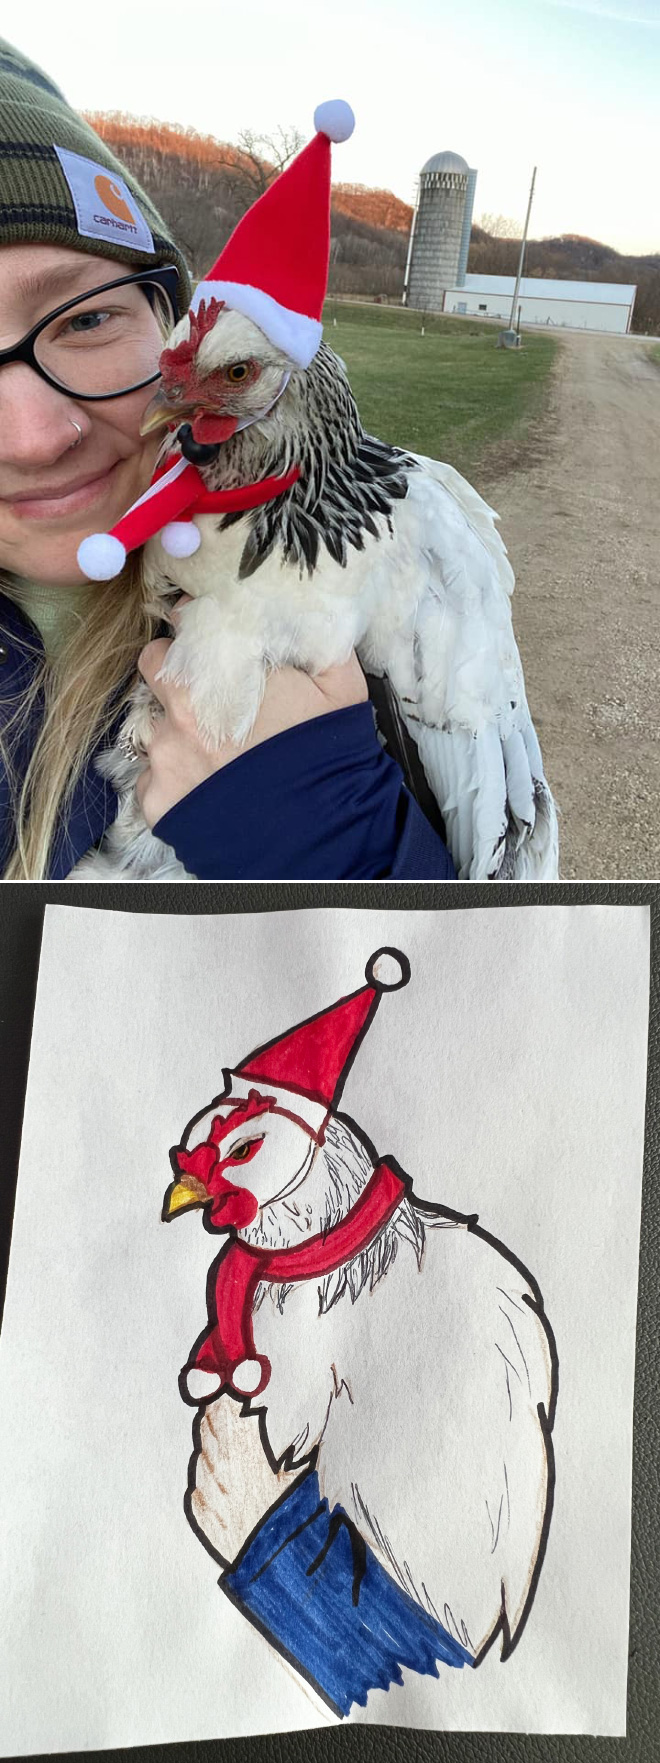 Poorly drawn chicken.